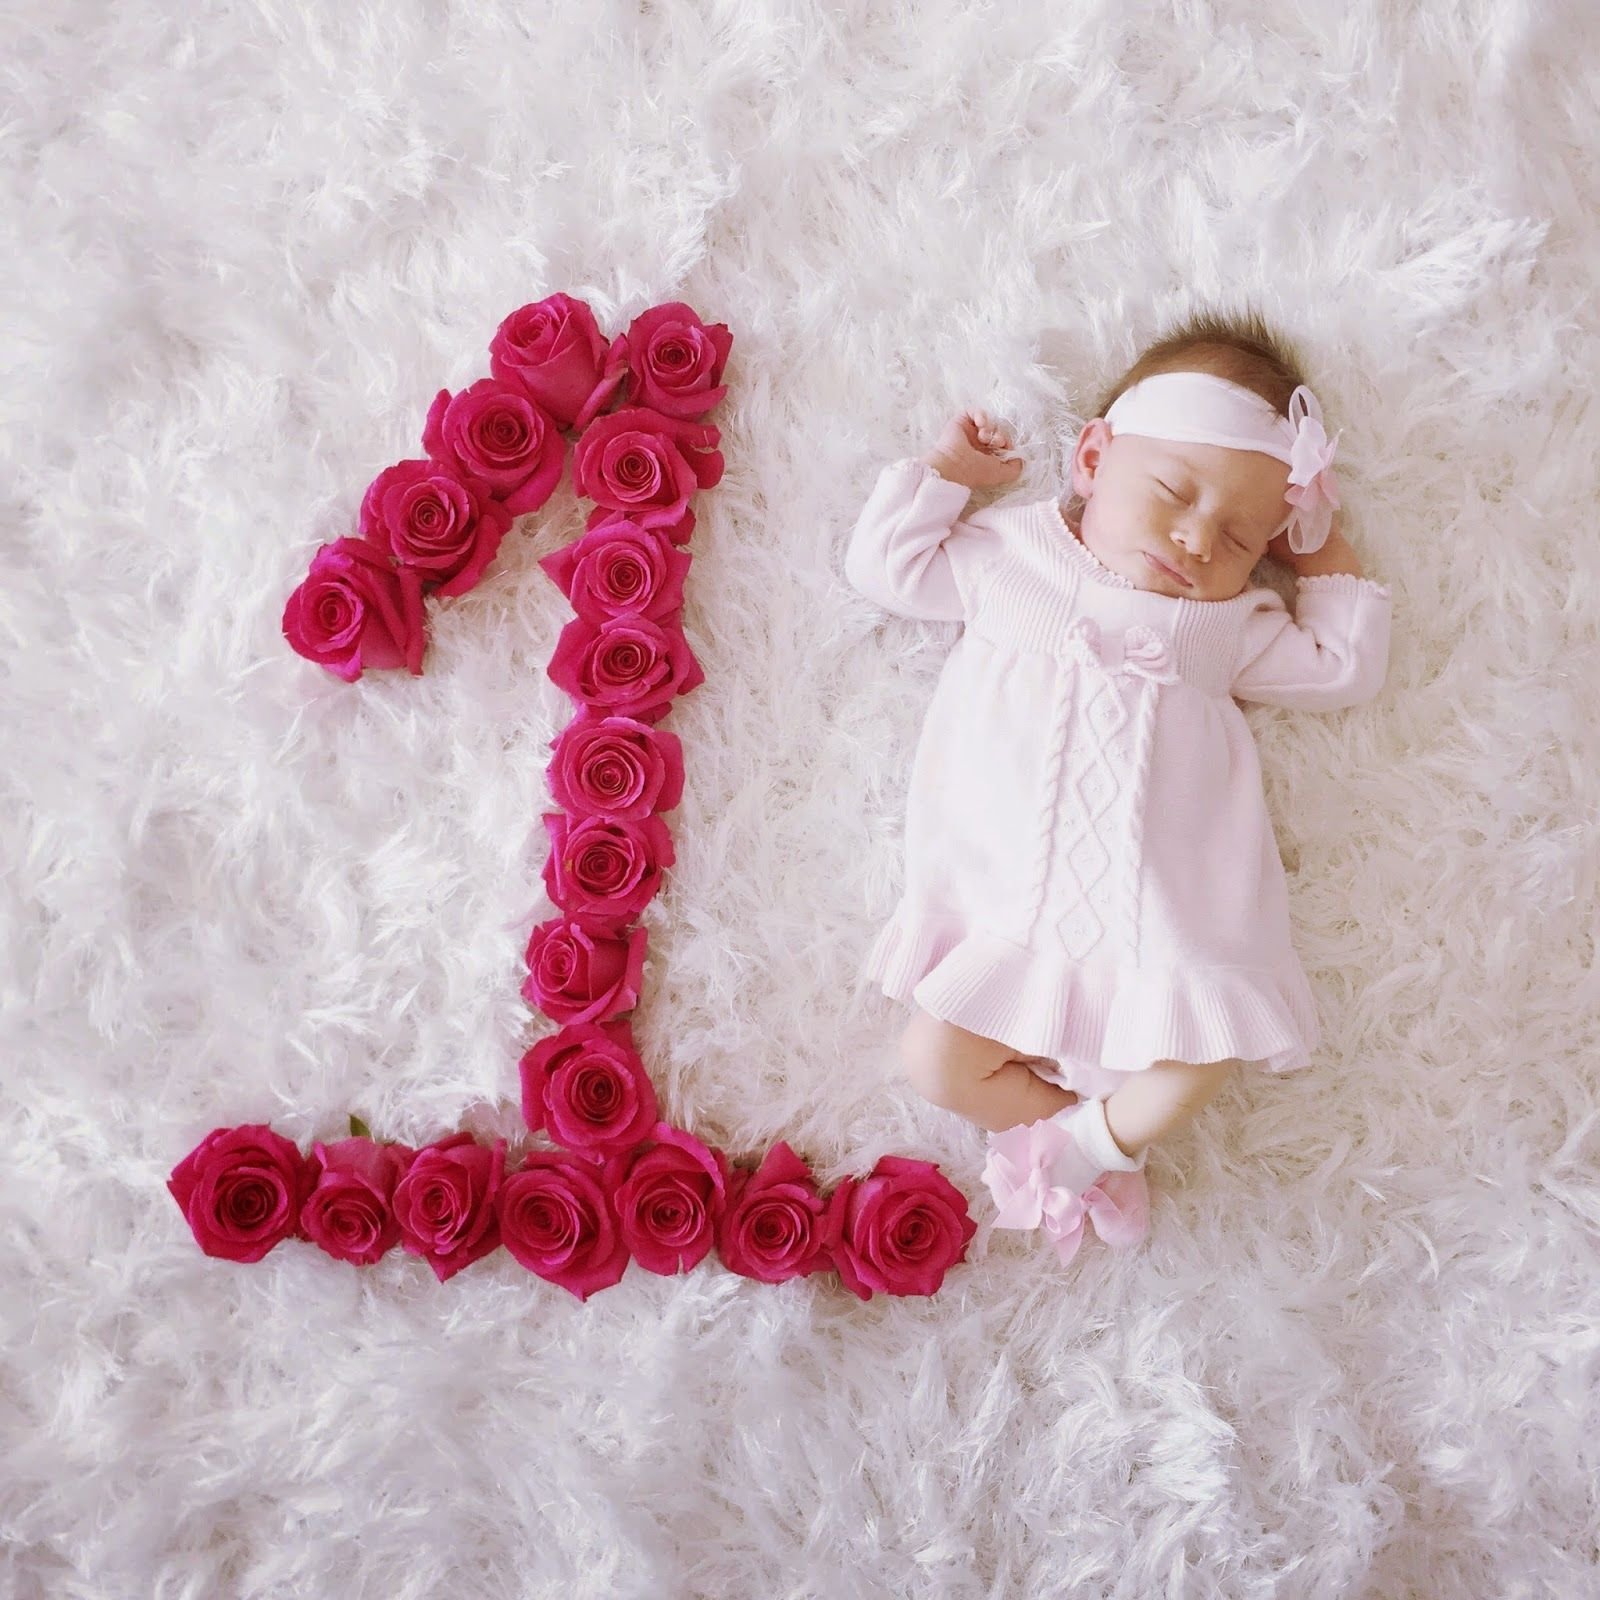 Фото 2 месяца ребенку с цифрой